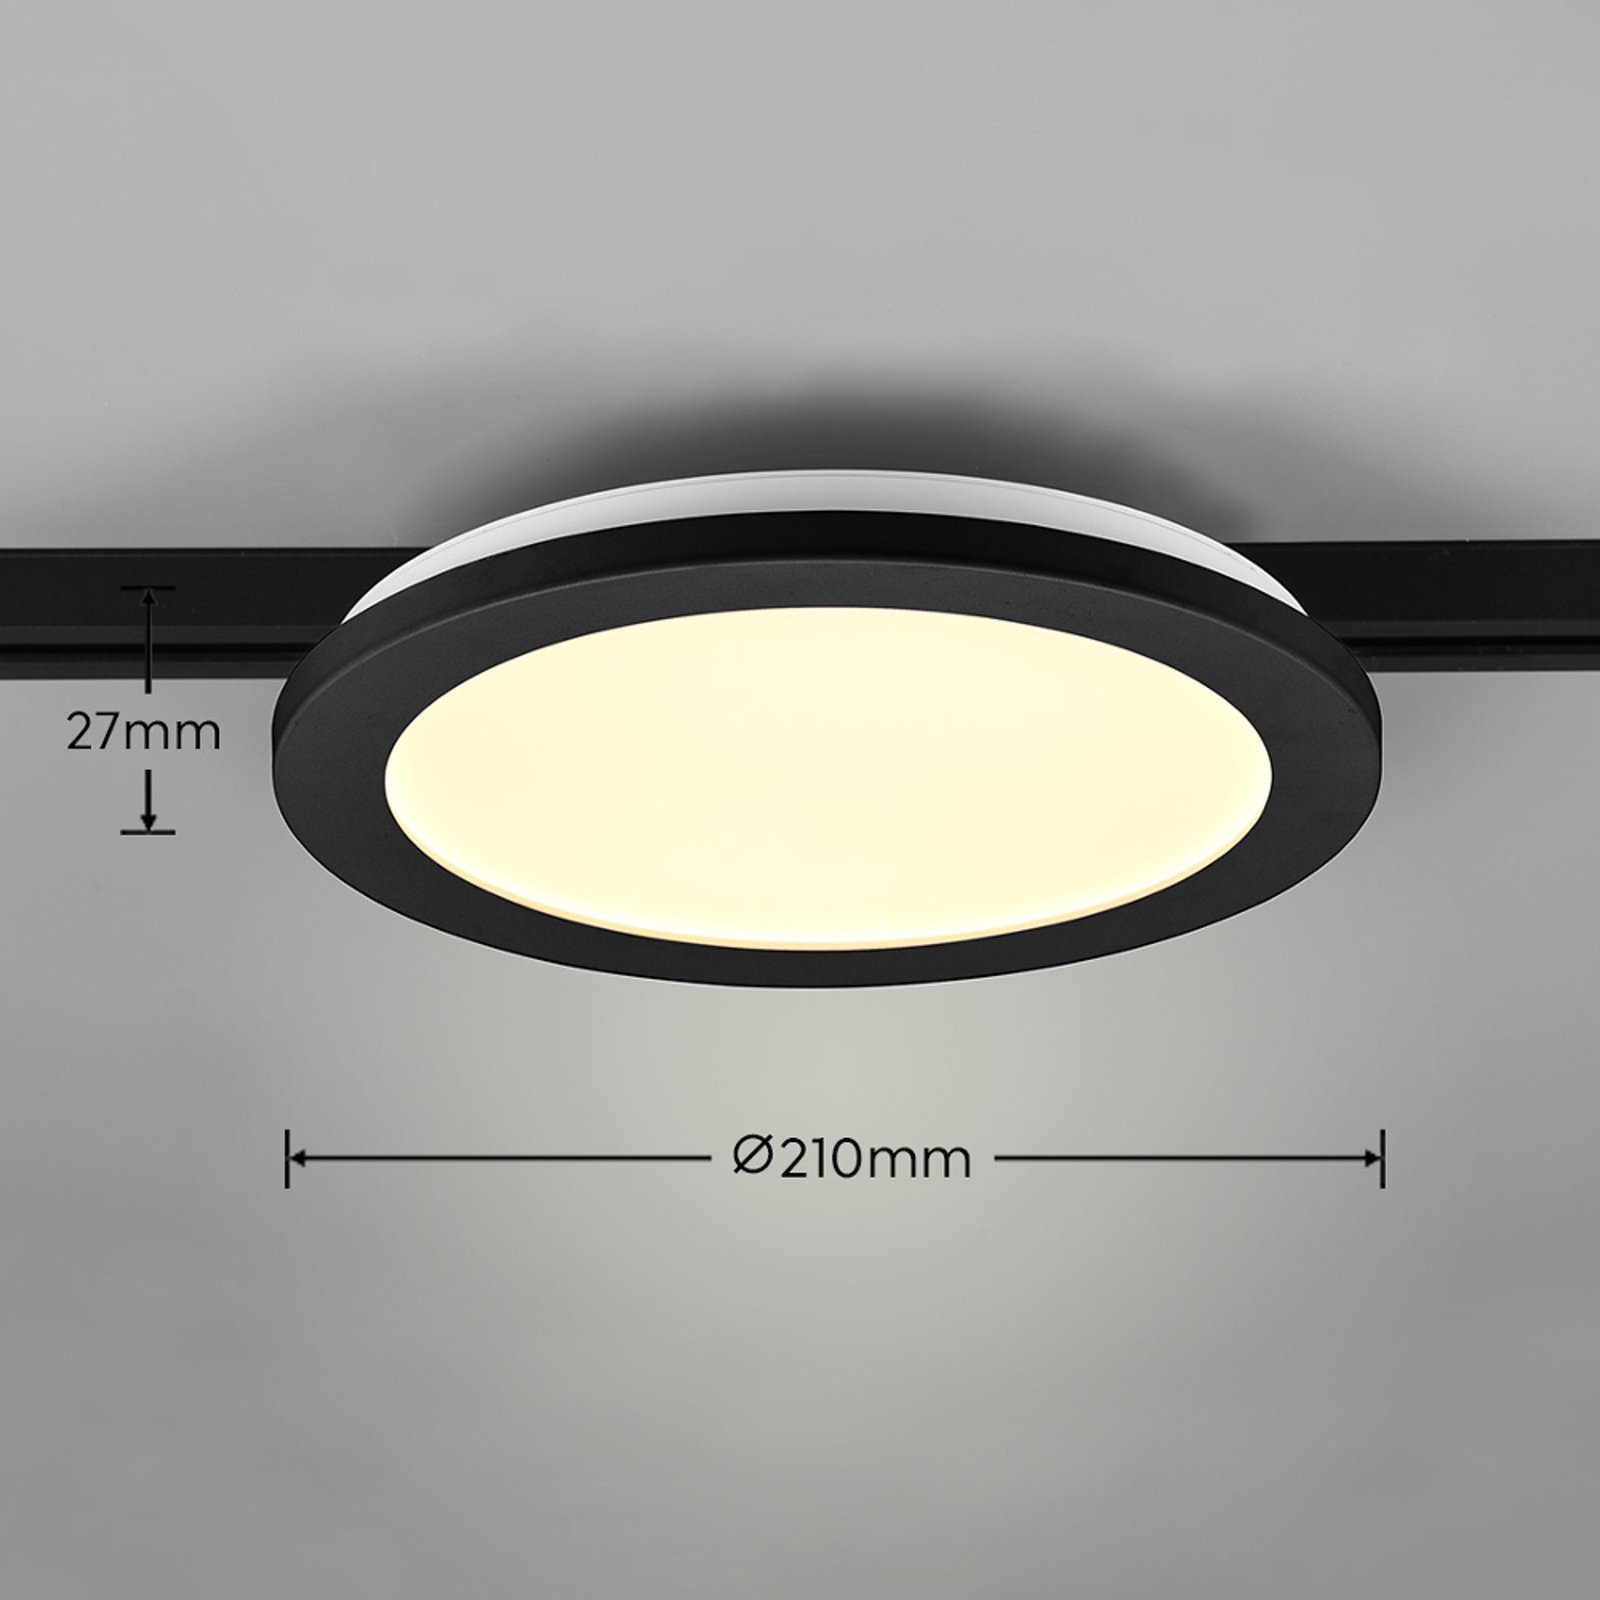 LED-Deckenlampe Camillus DUOline, Ø 26 cm, schwarz